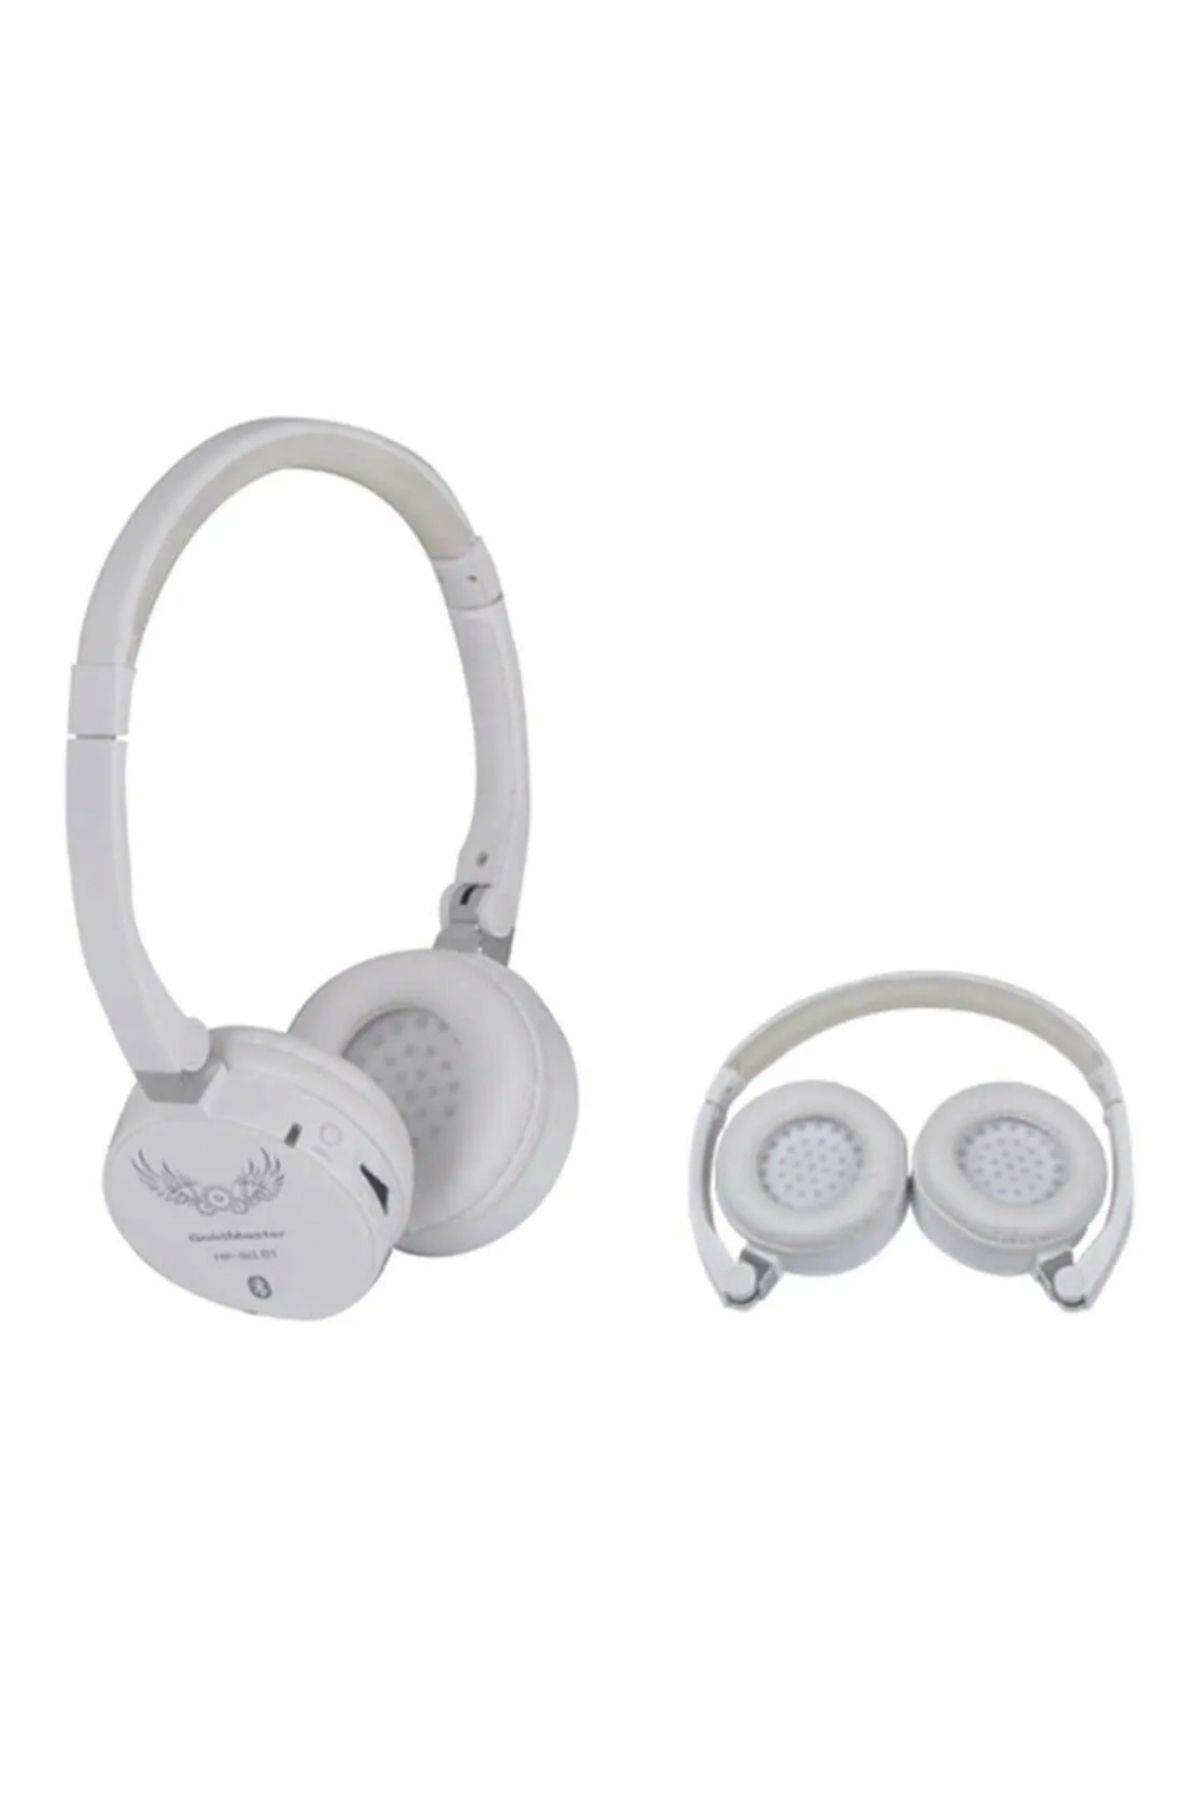 GoldMaster Hp-193 Bluetooth Dahili Bataryalı Kulak Üstü Kulaklık